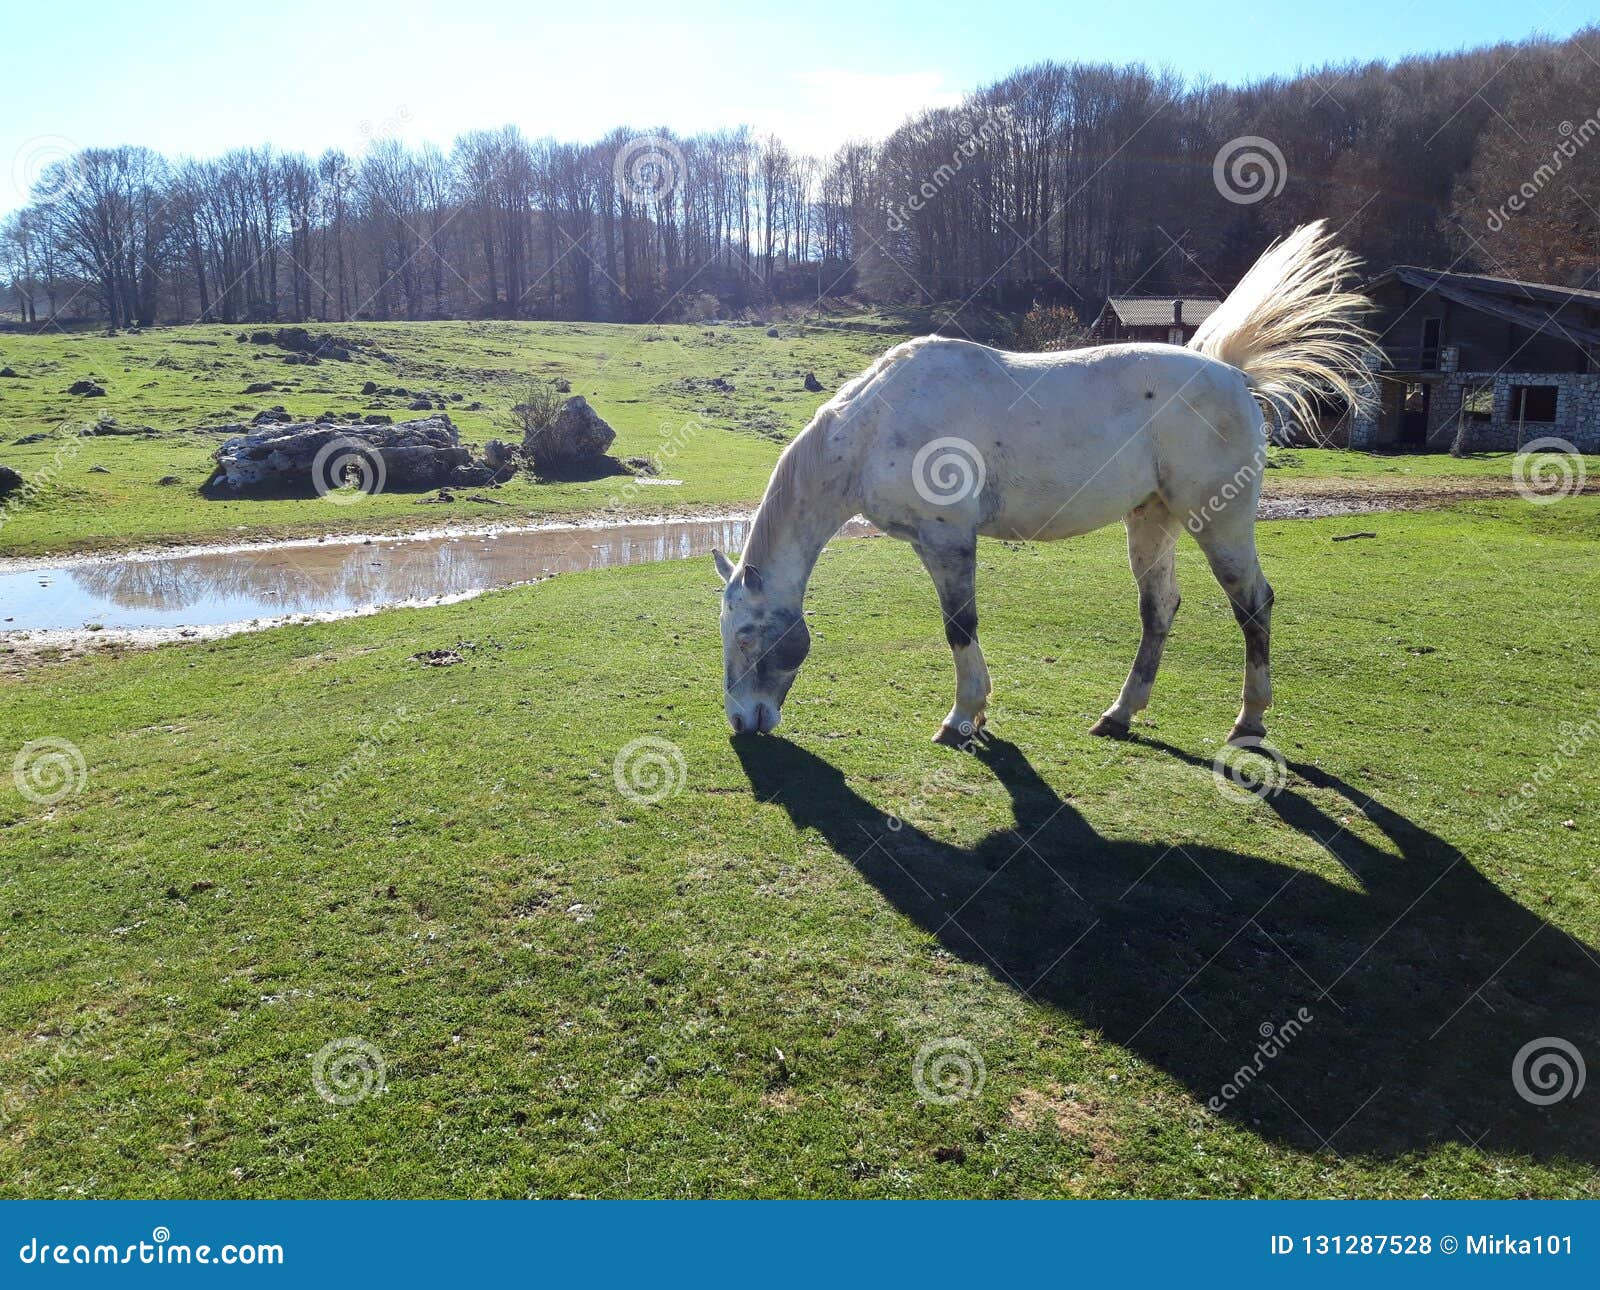 white horse in a bucolic landscape